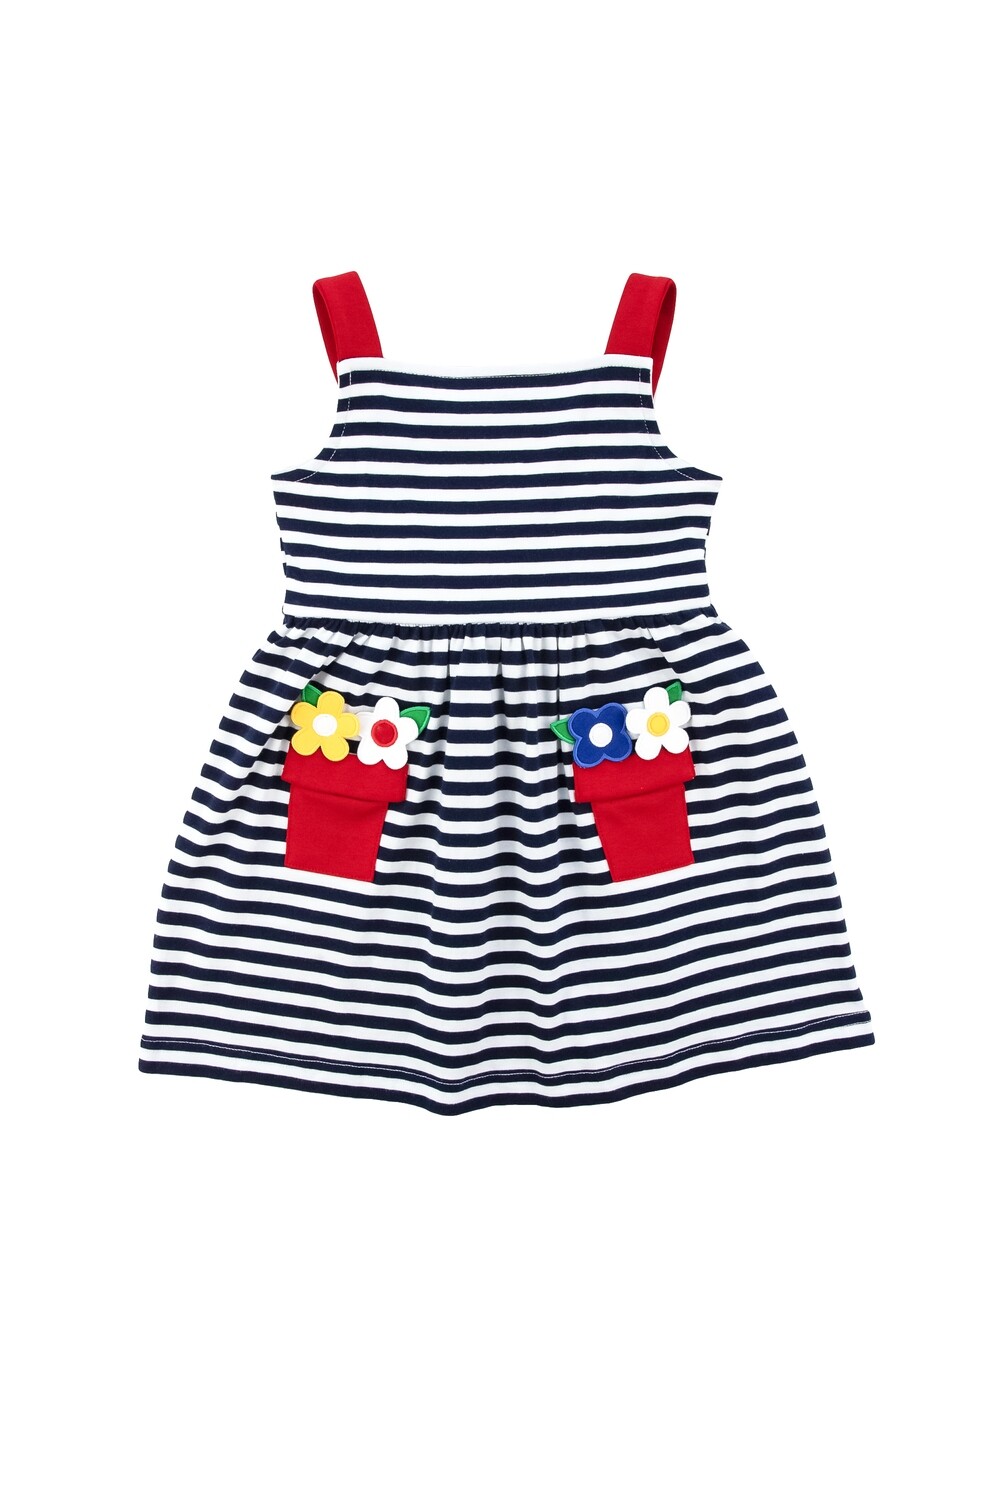 Eiseman Girls Stripe Dress w/Flower 528